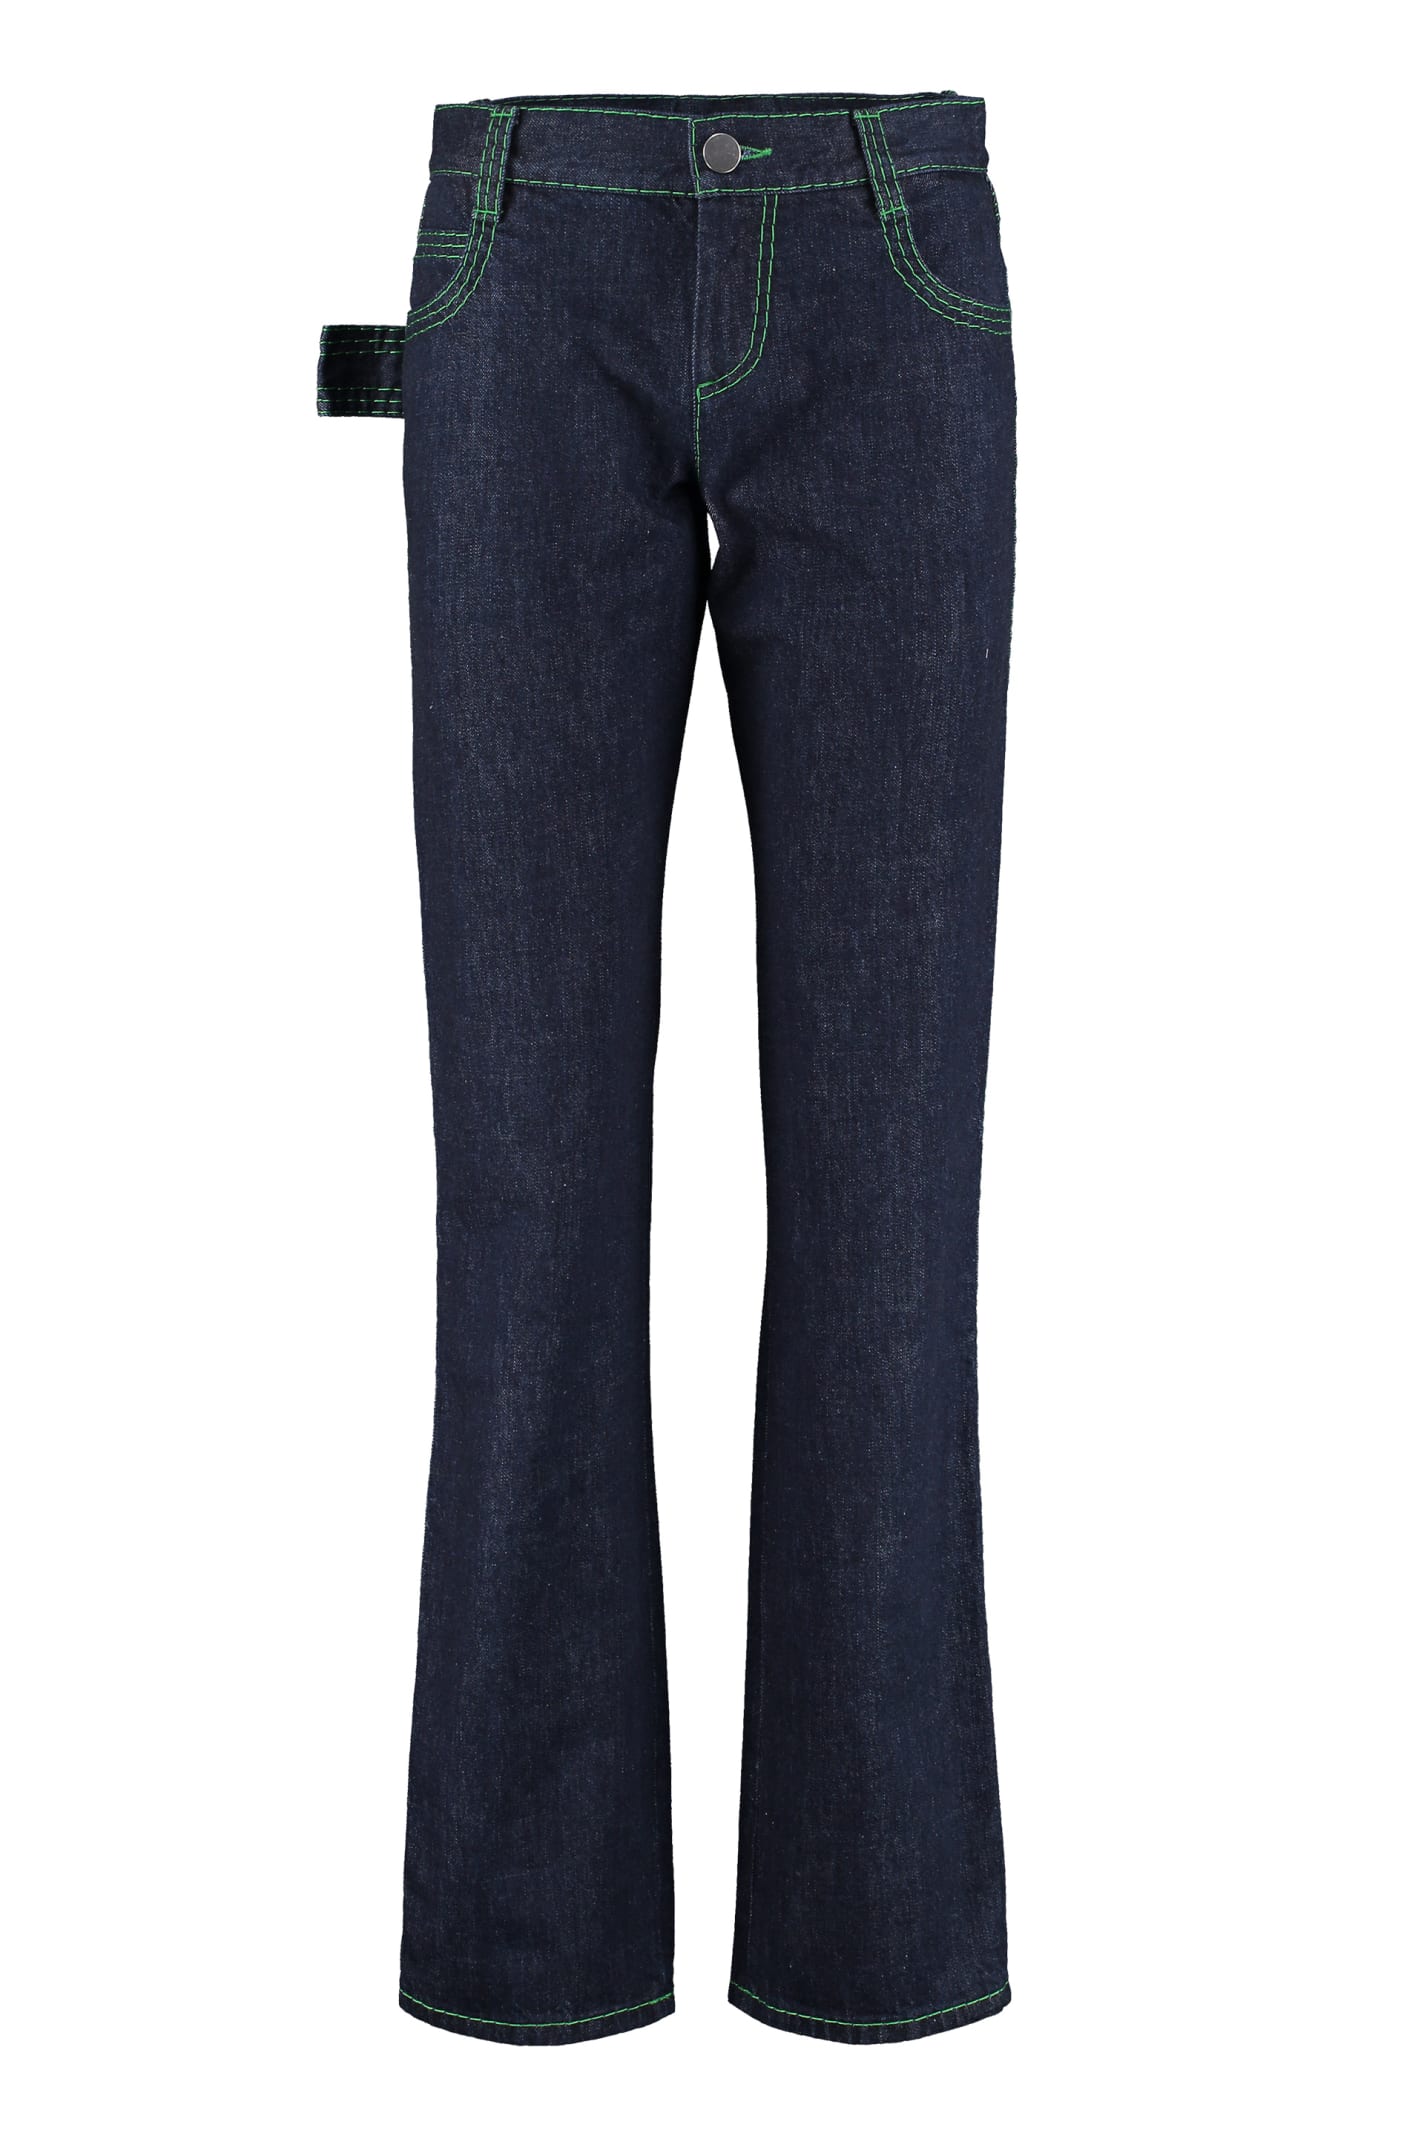 Bottega Veneta 5-pocket Jeans